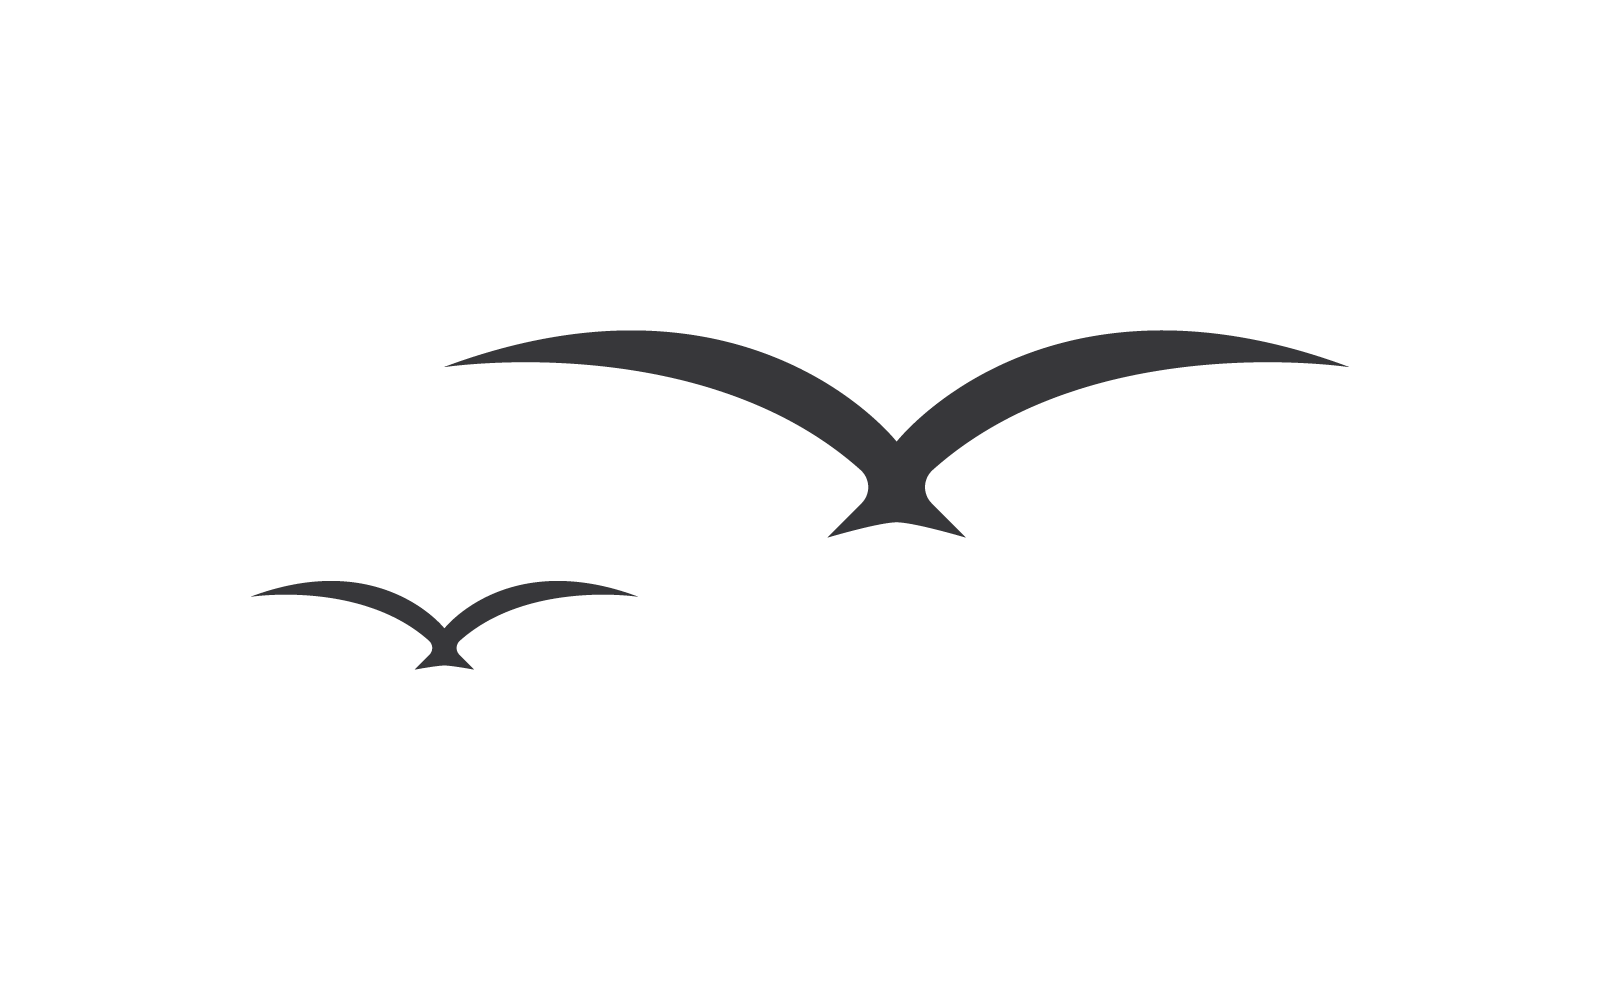 Seagul bird illustration vector design